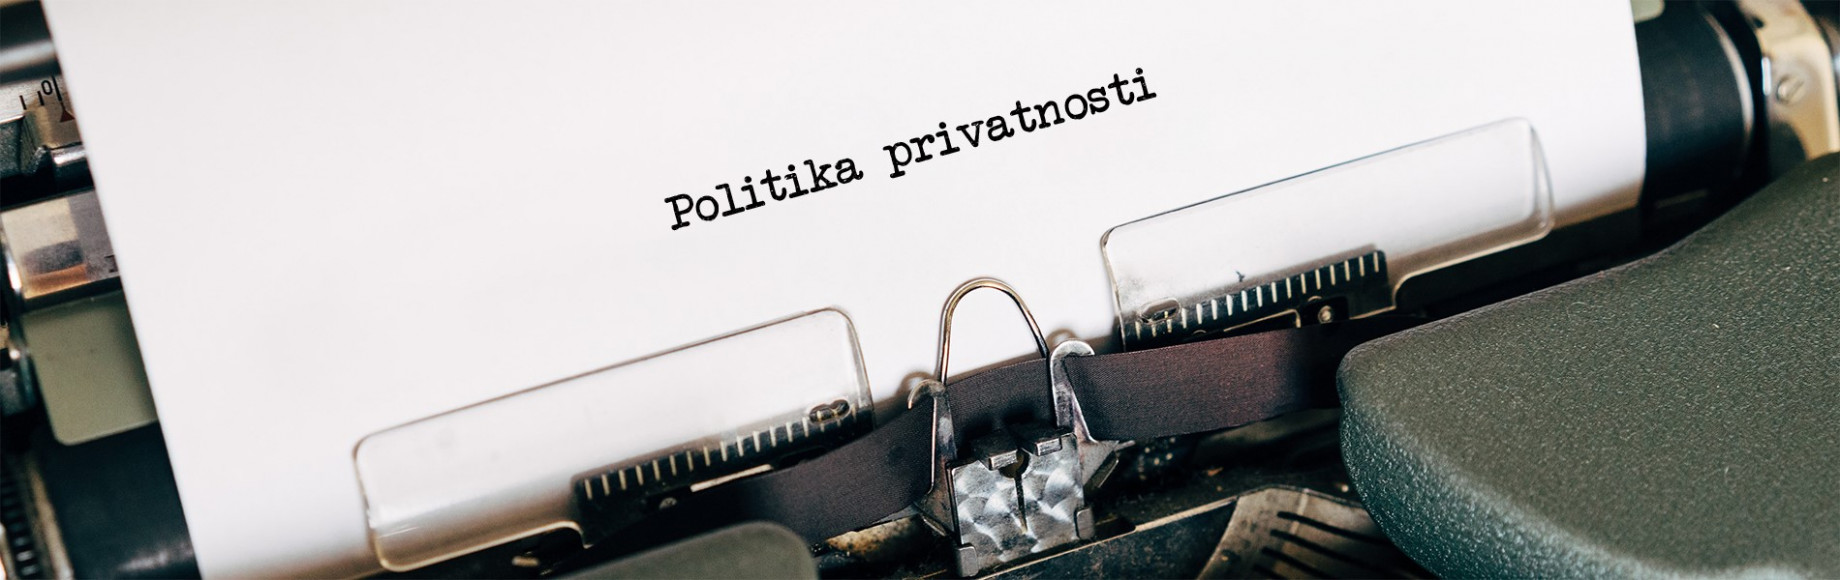 Politika privatnosti i zaštita podataka